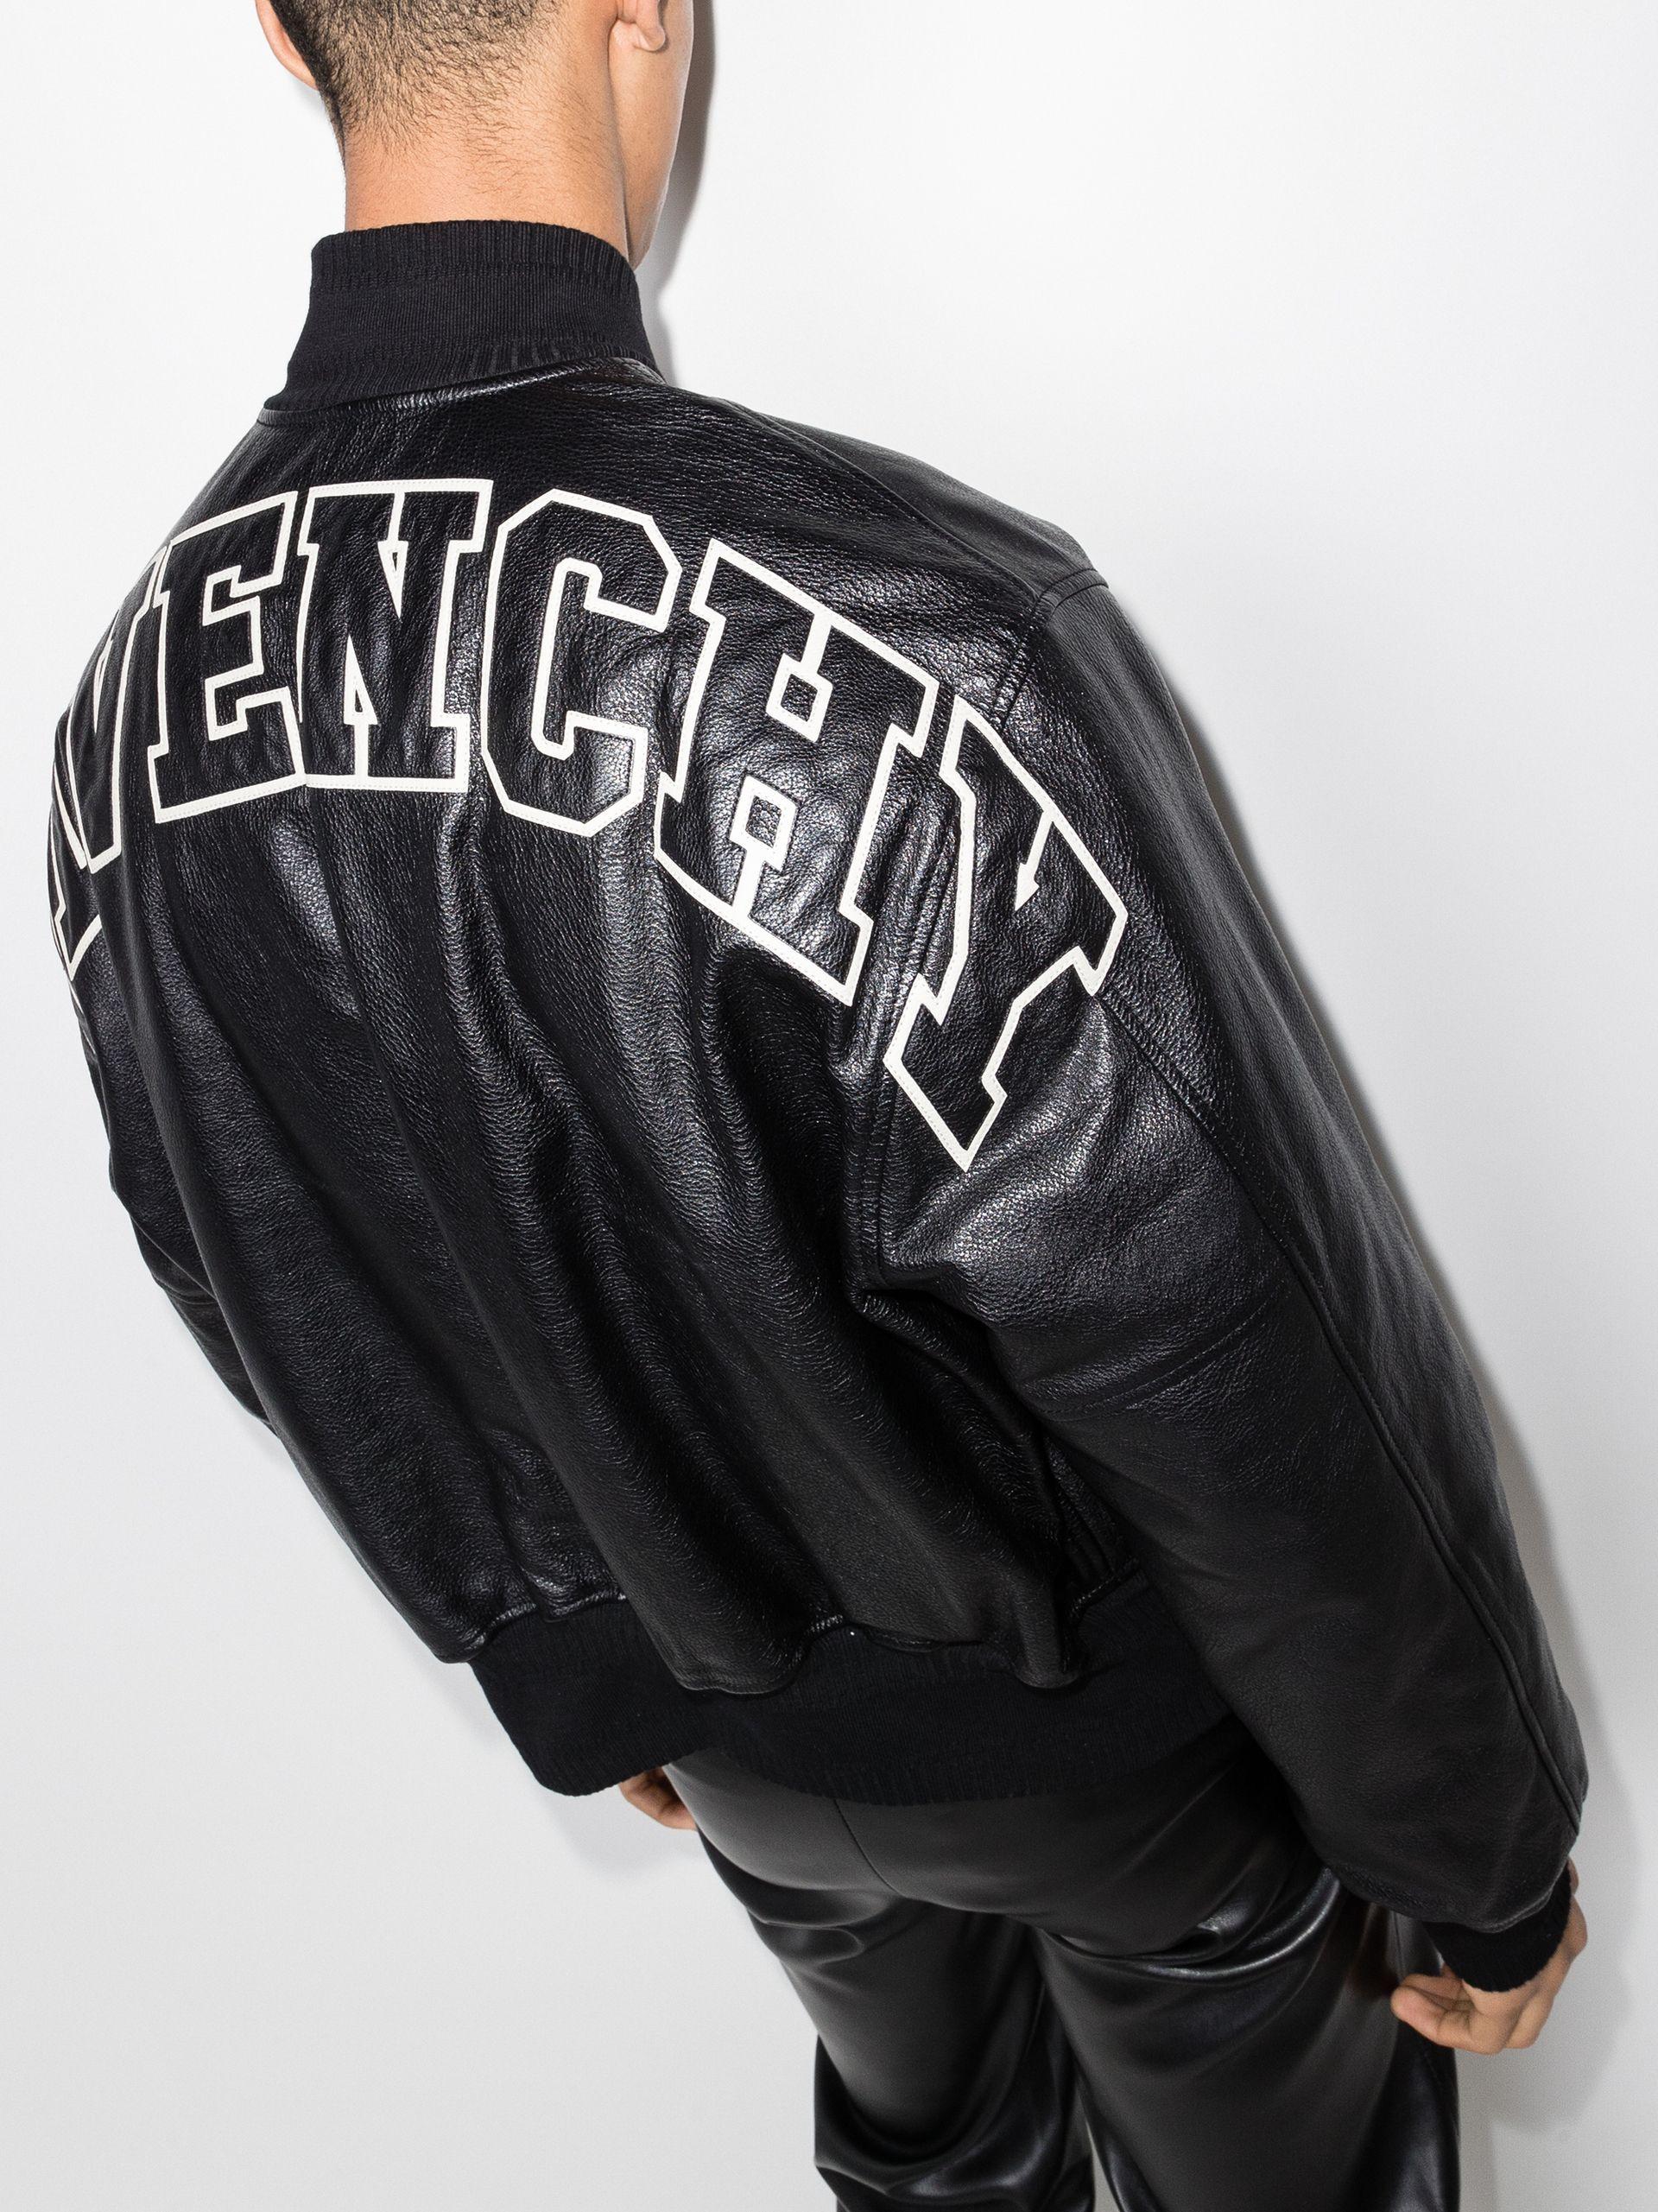 Givenchy Logo Leather Bomber Jacket in Black for Men | Lyst